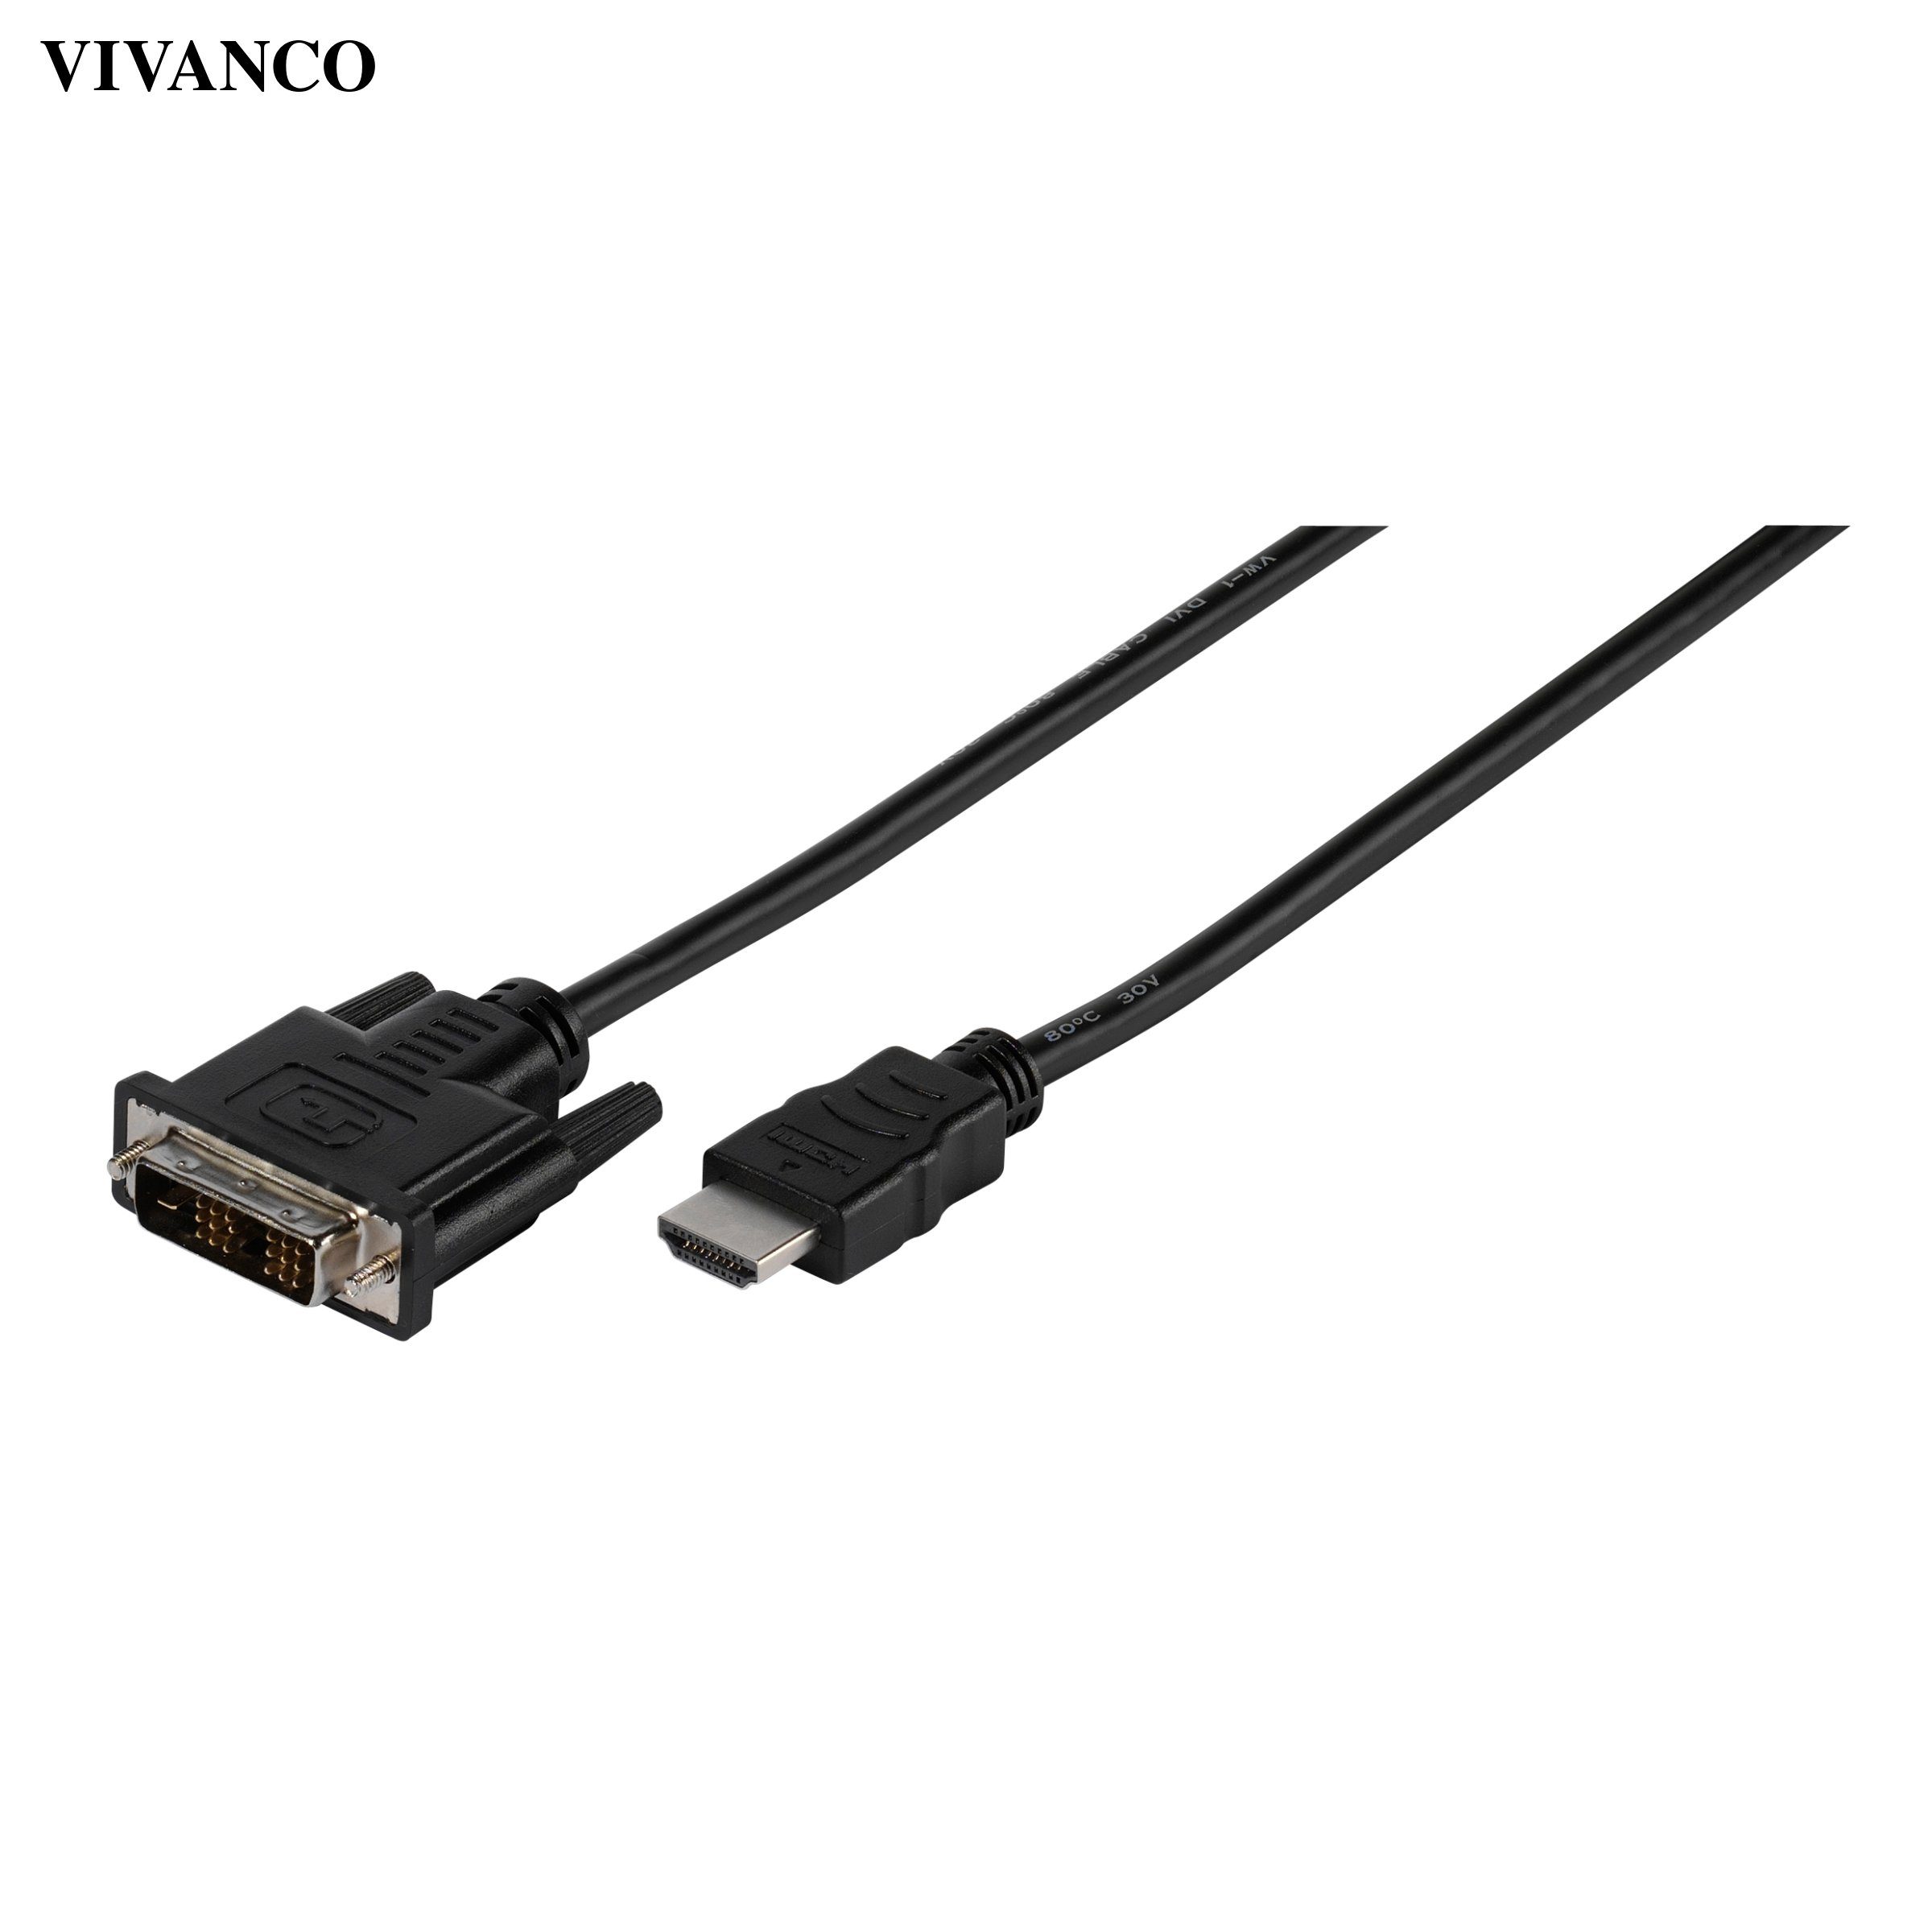 Vivanco Video-Kabel, HDMI, Hdmi zu DVI Kabel